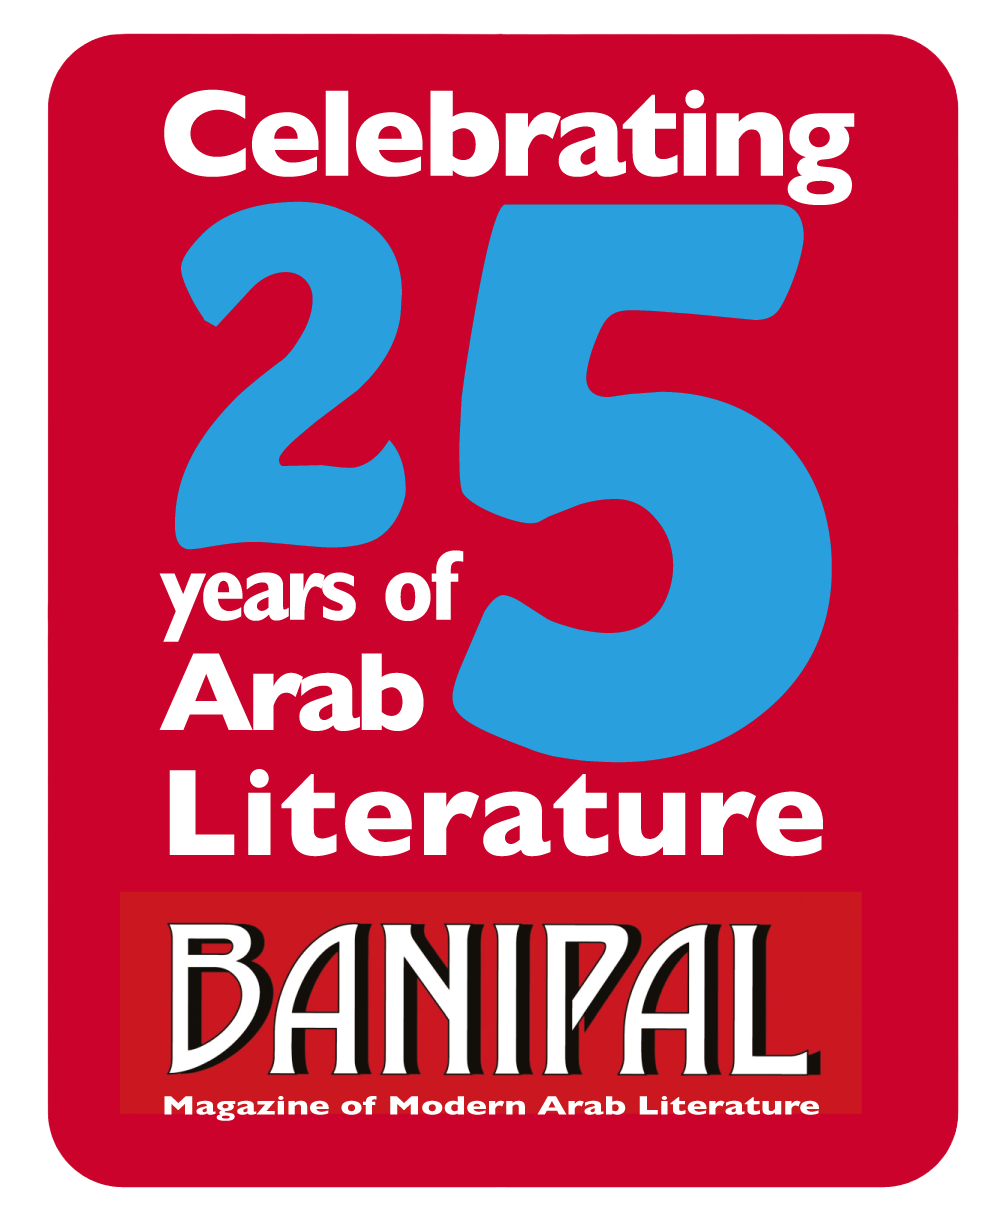 Celebrating 25 years of Arab Literature